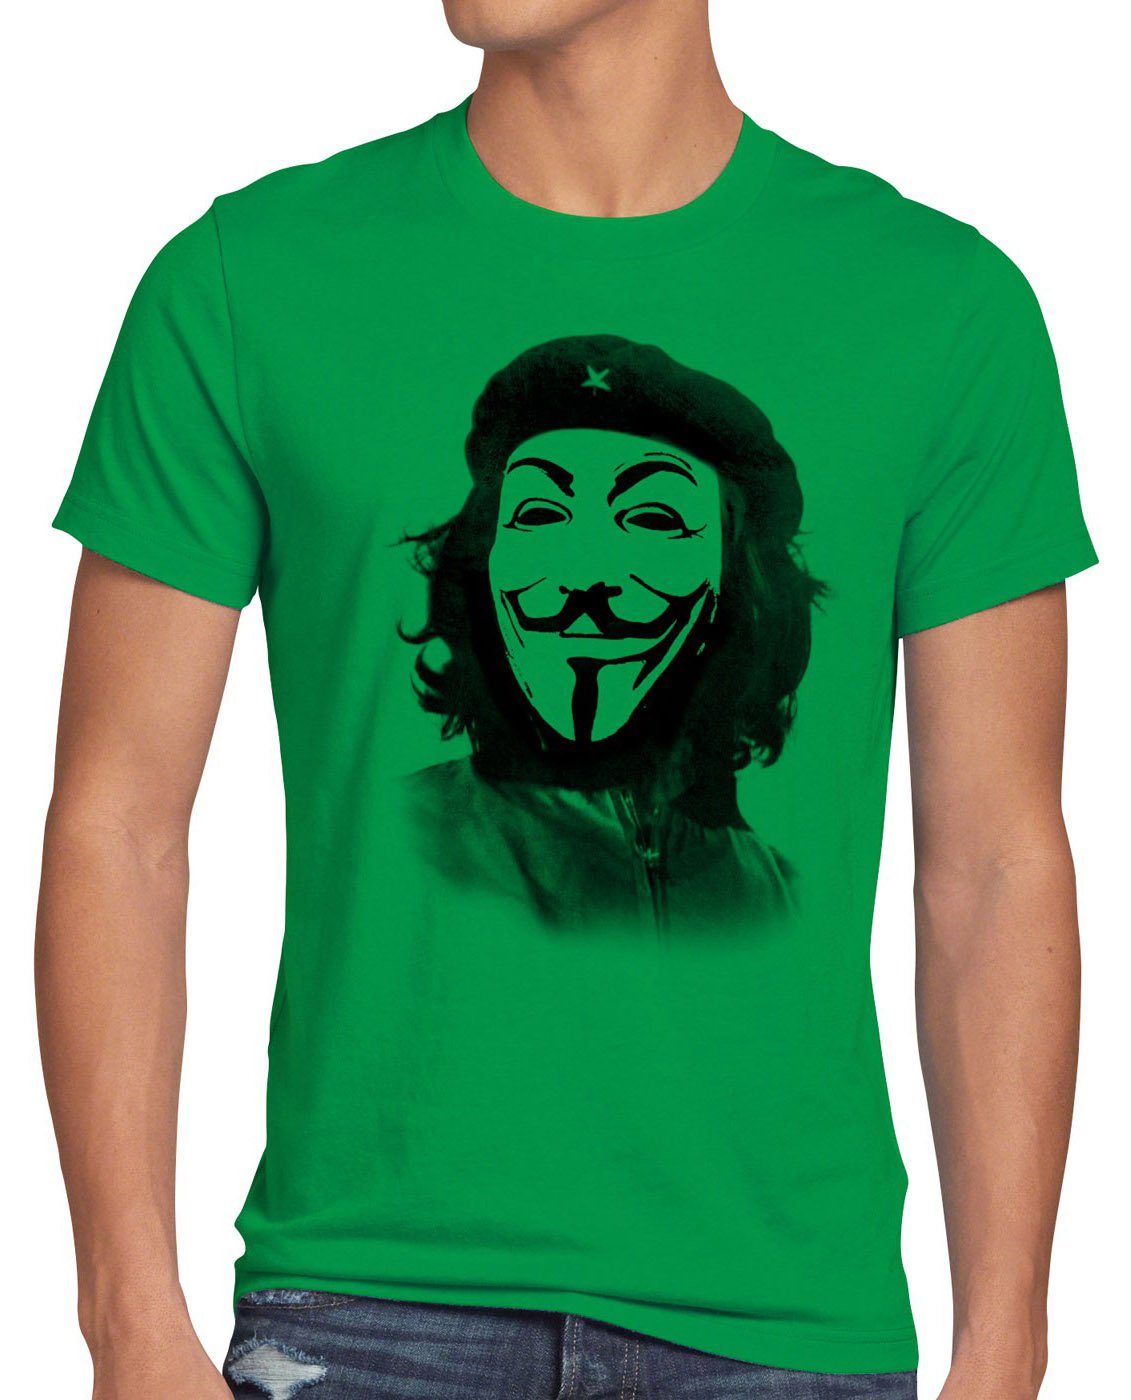 style3 Print-Shirt Herren Guevara fawkes Che g8 kuba grün guy maske hacker occupy T-Shirt guy fawkes Anonymous